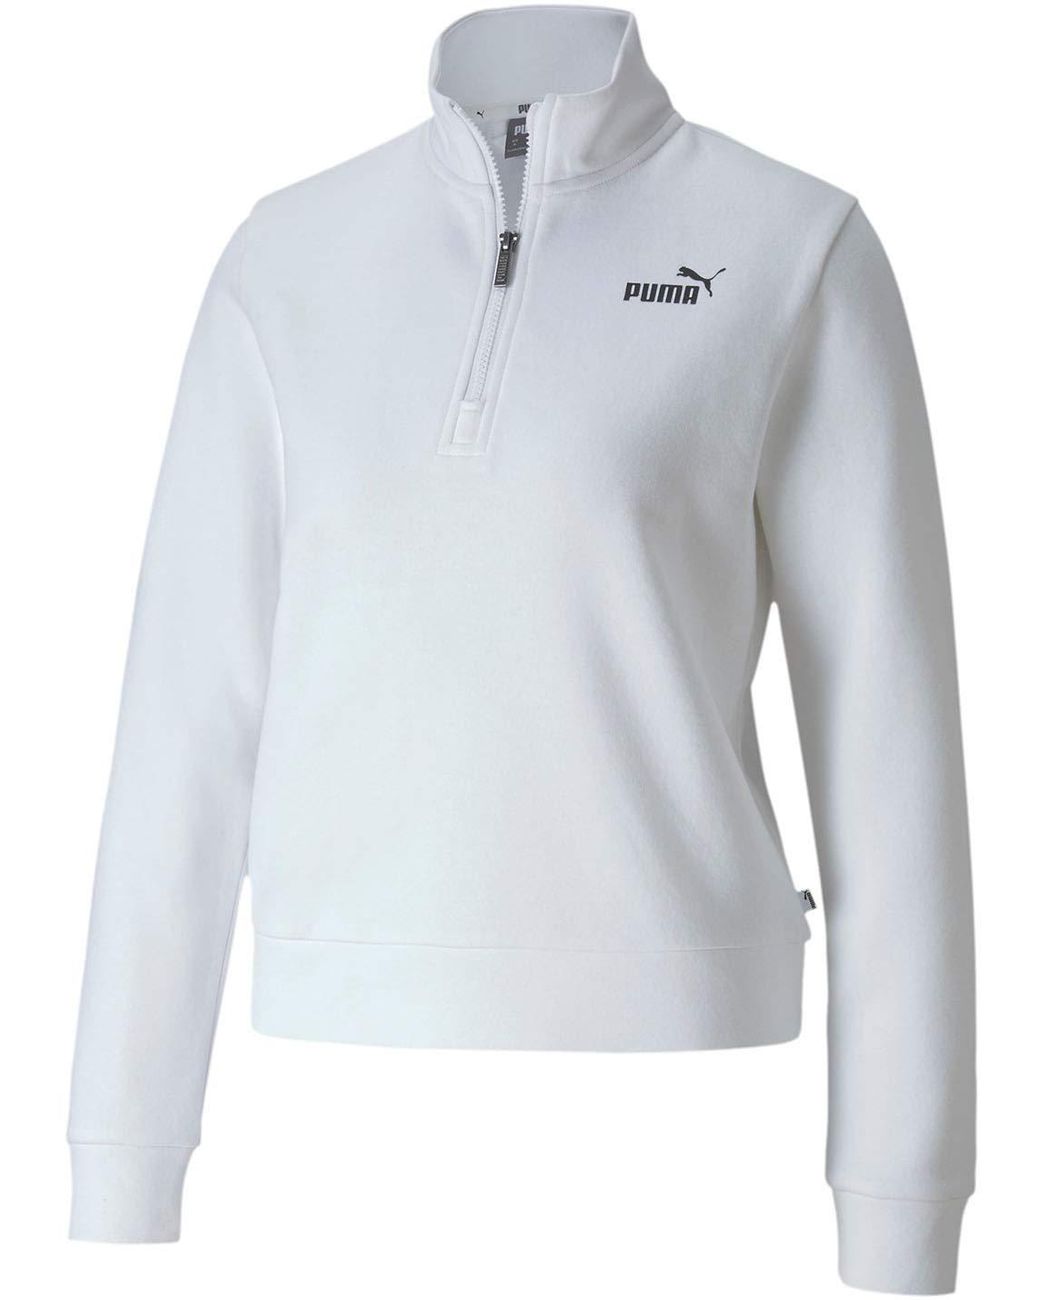 PUMA Essentials+ Half-zip Fleece Crew Pullover Sweater in White - Lyst